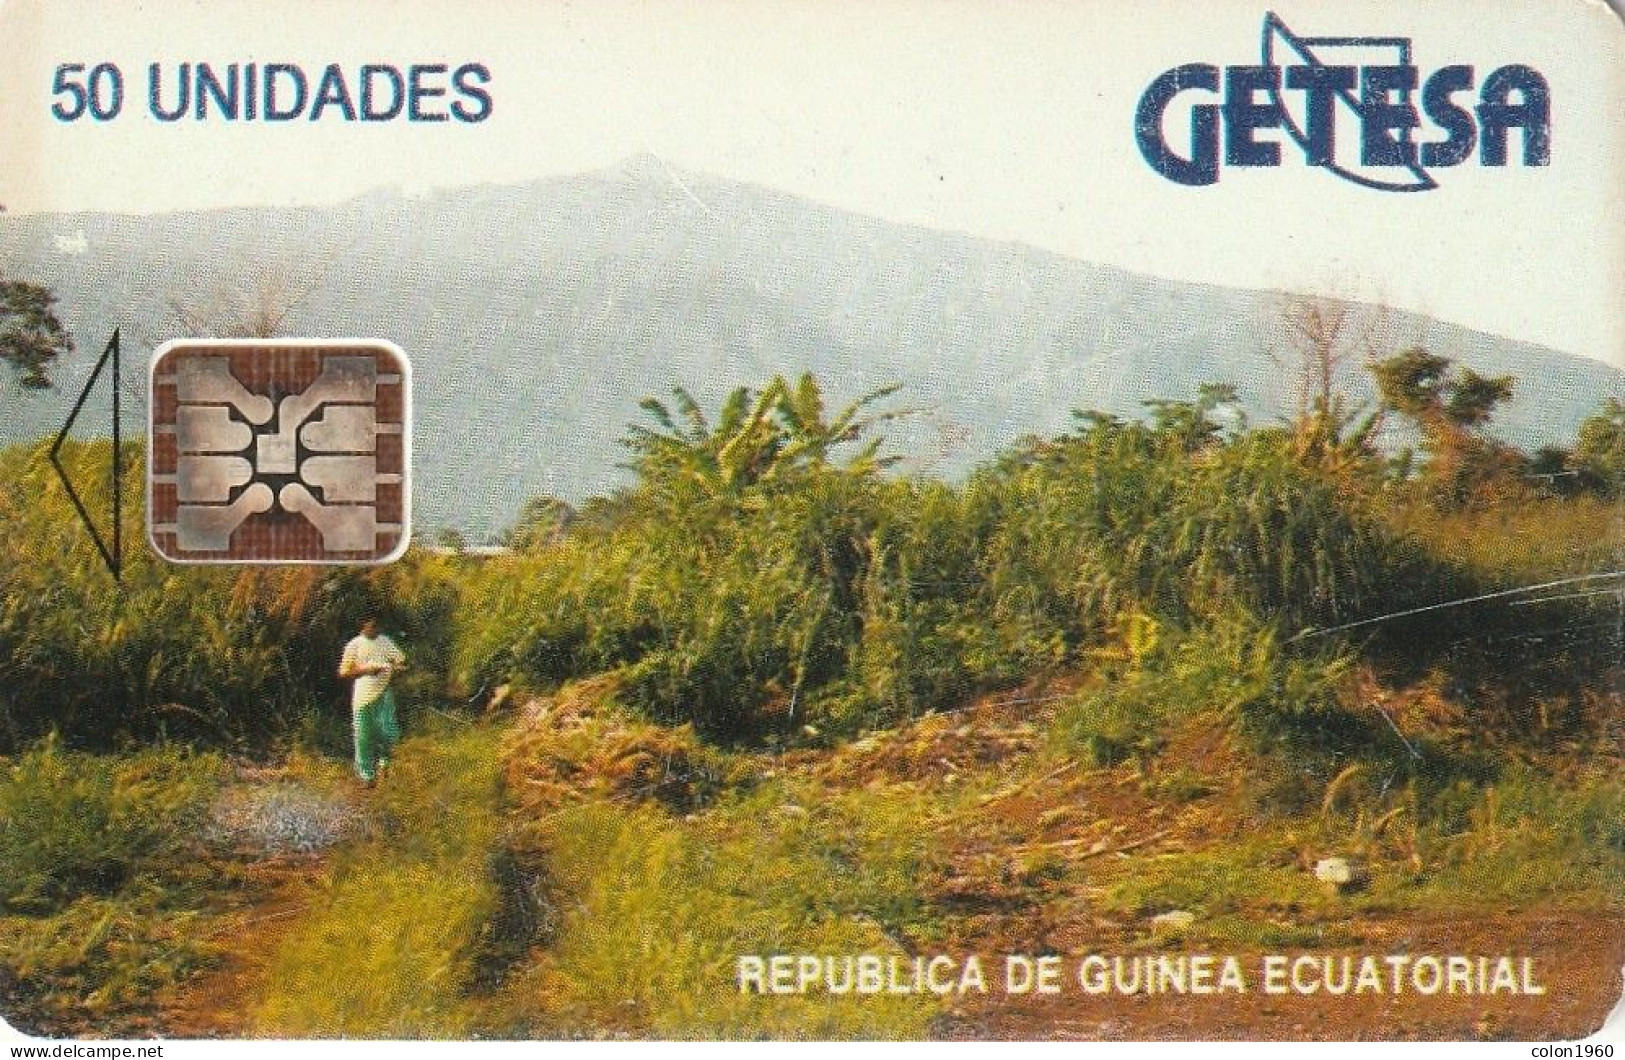 GUINEA ECUATORIAL. GQ-GET-0006B. Landscape-SC5 (Black Text - White). 1994. (002) - Guinea Ecuatorial